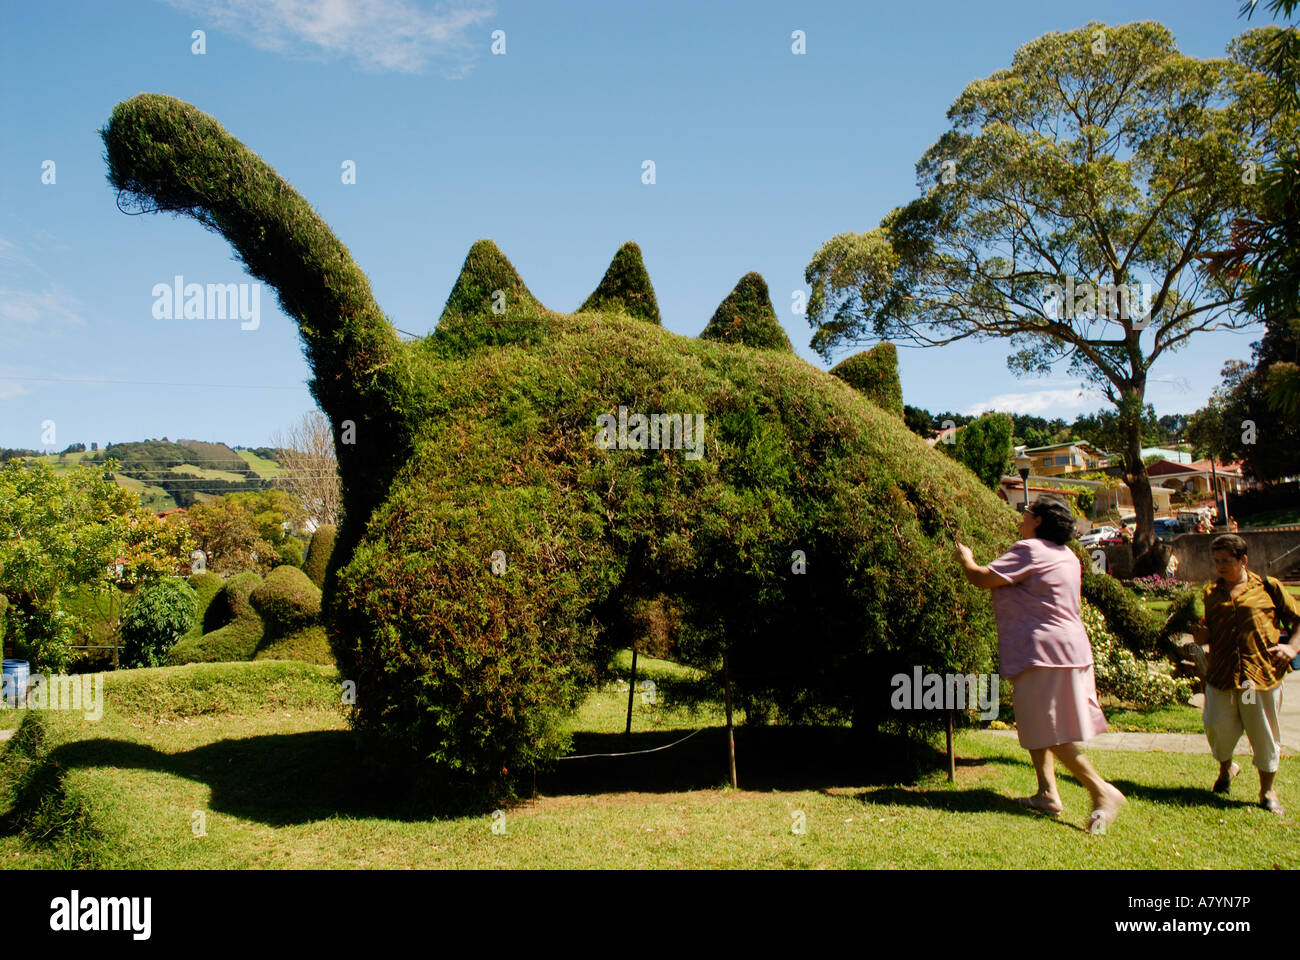 Costa Rica, Zarcero, topiary dinosaur Stock Photo